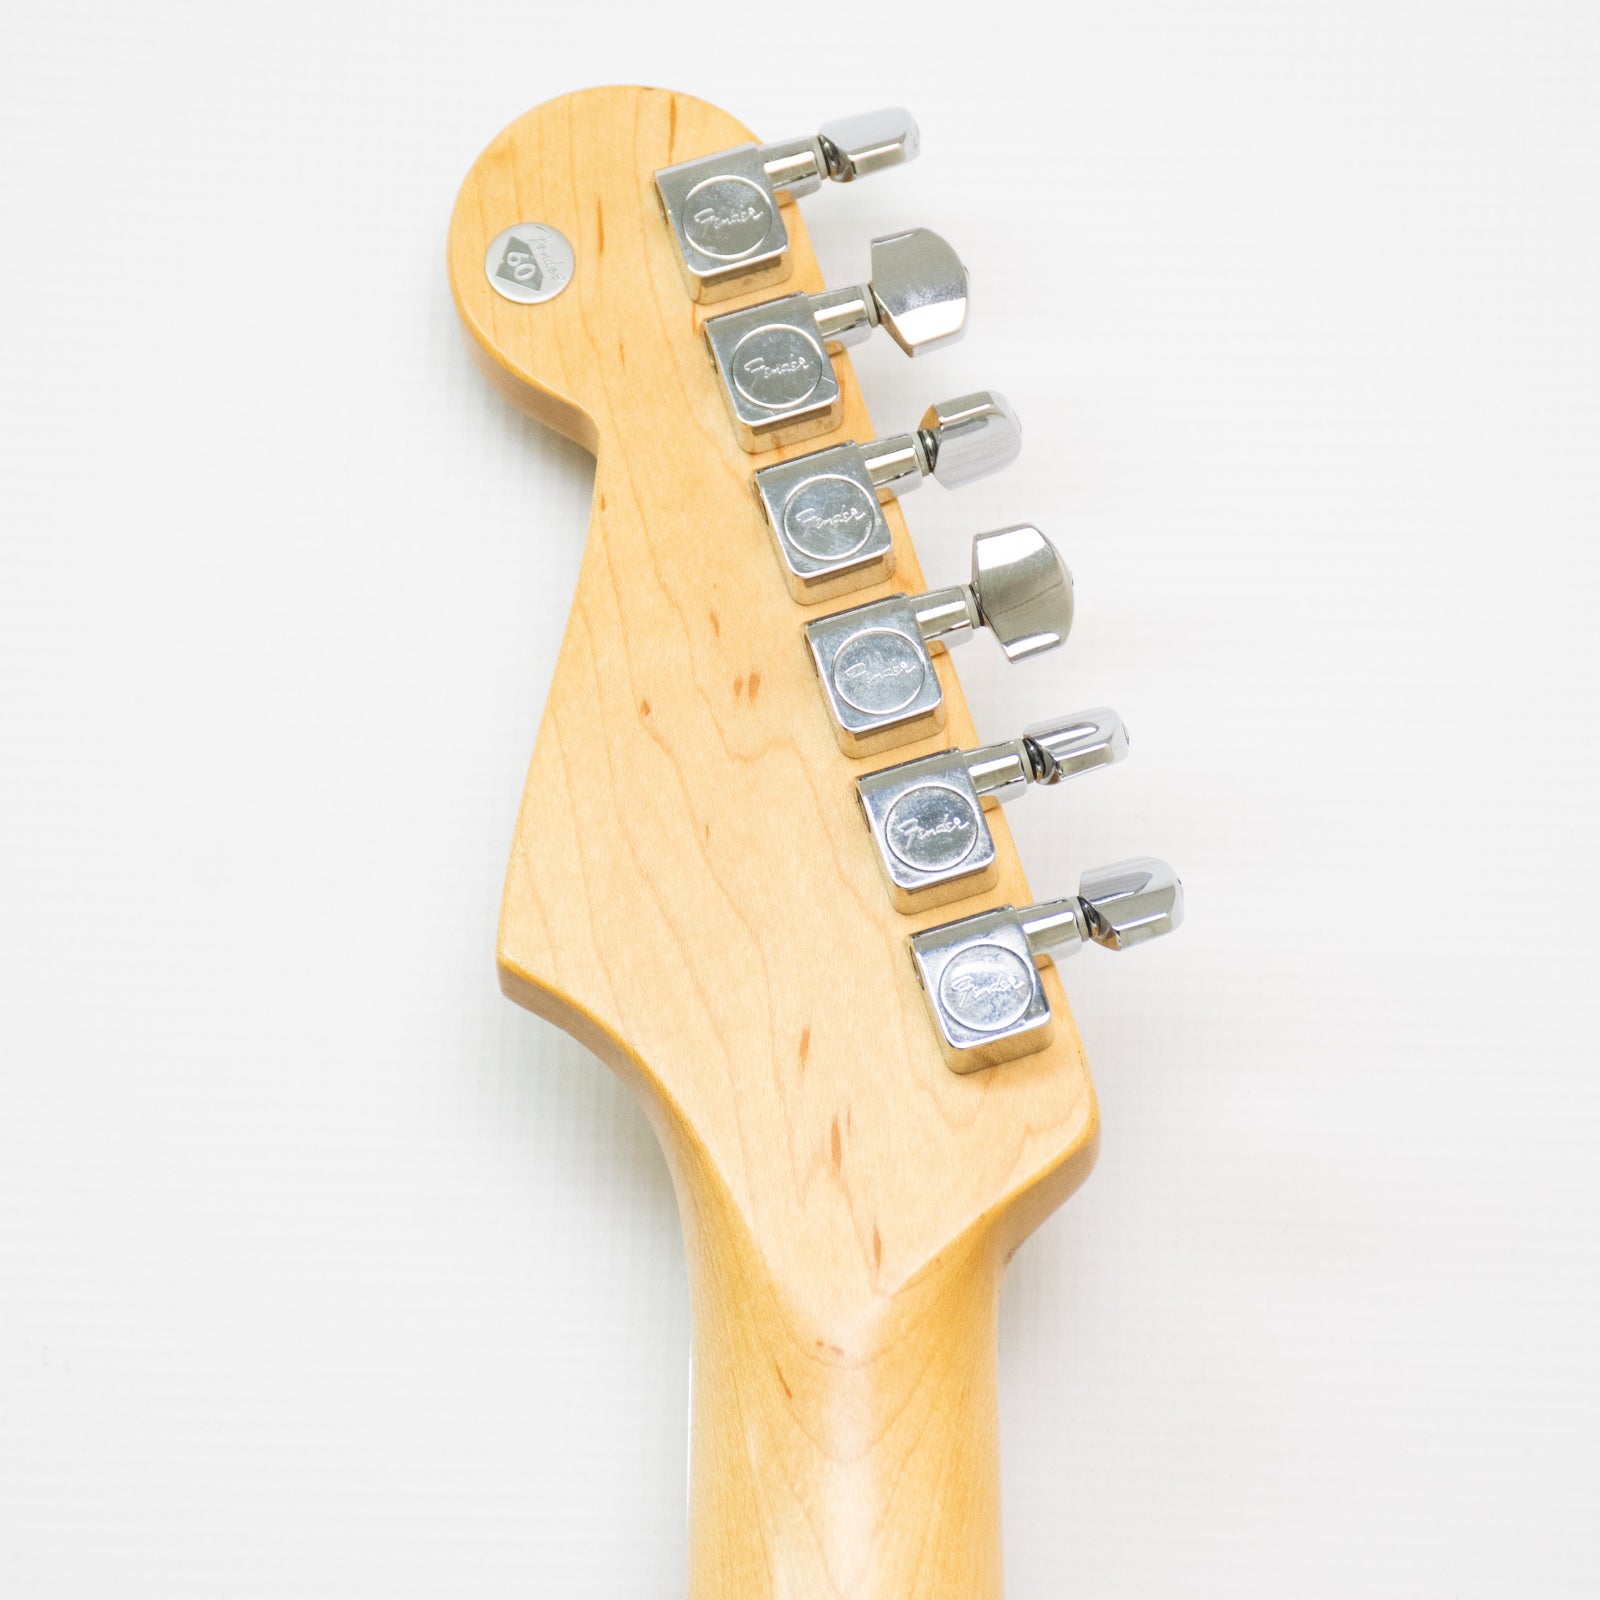 Fender Stratocaster Red - MIM 2006 - 